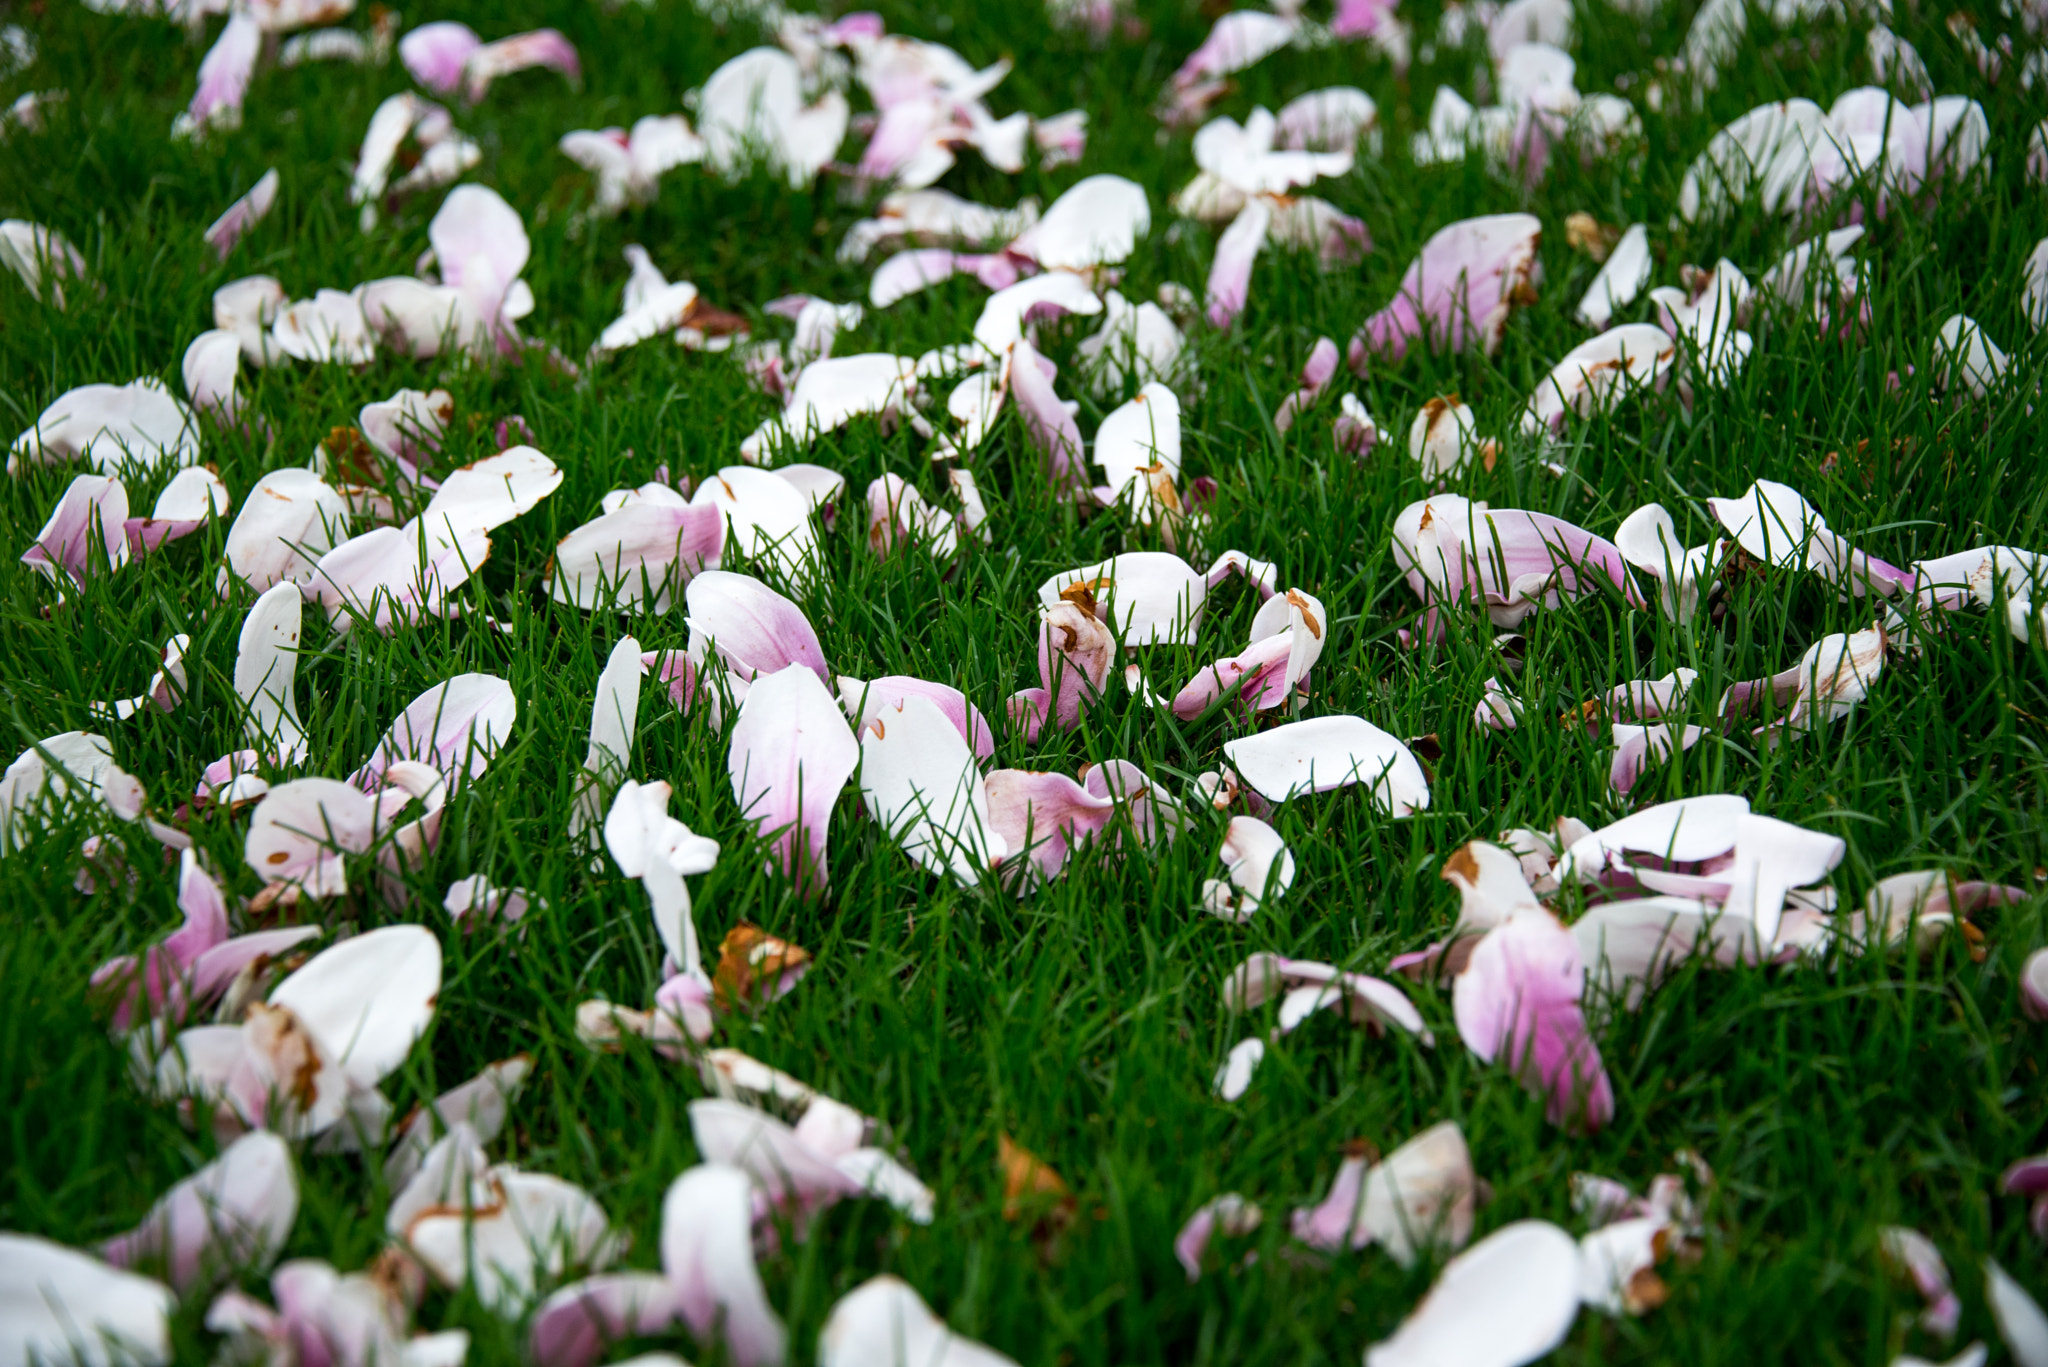 Flowers on a grass